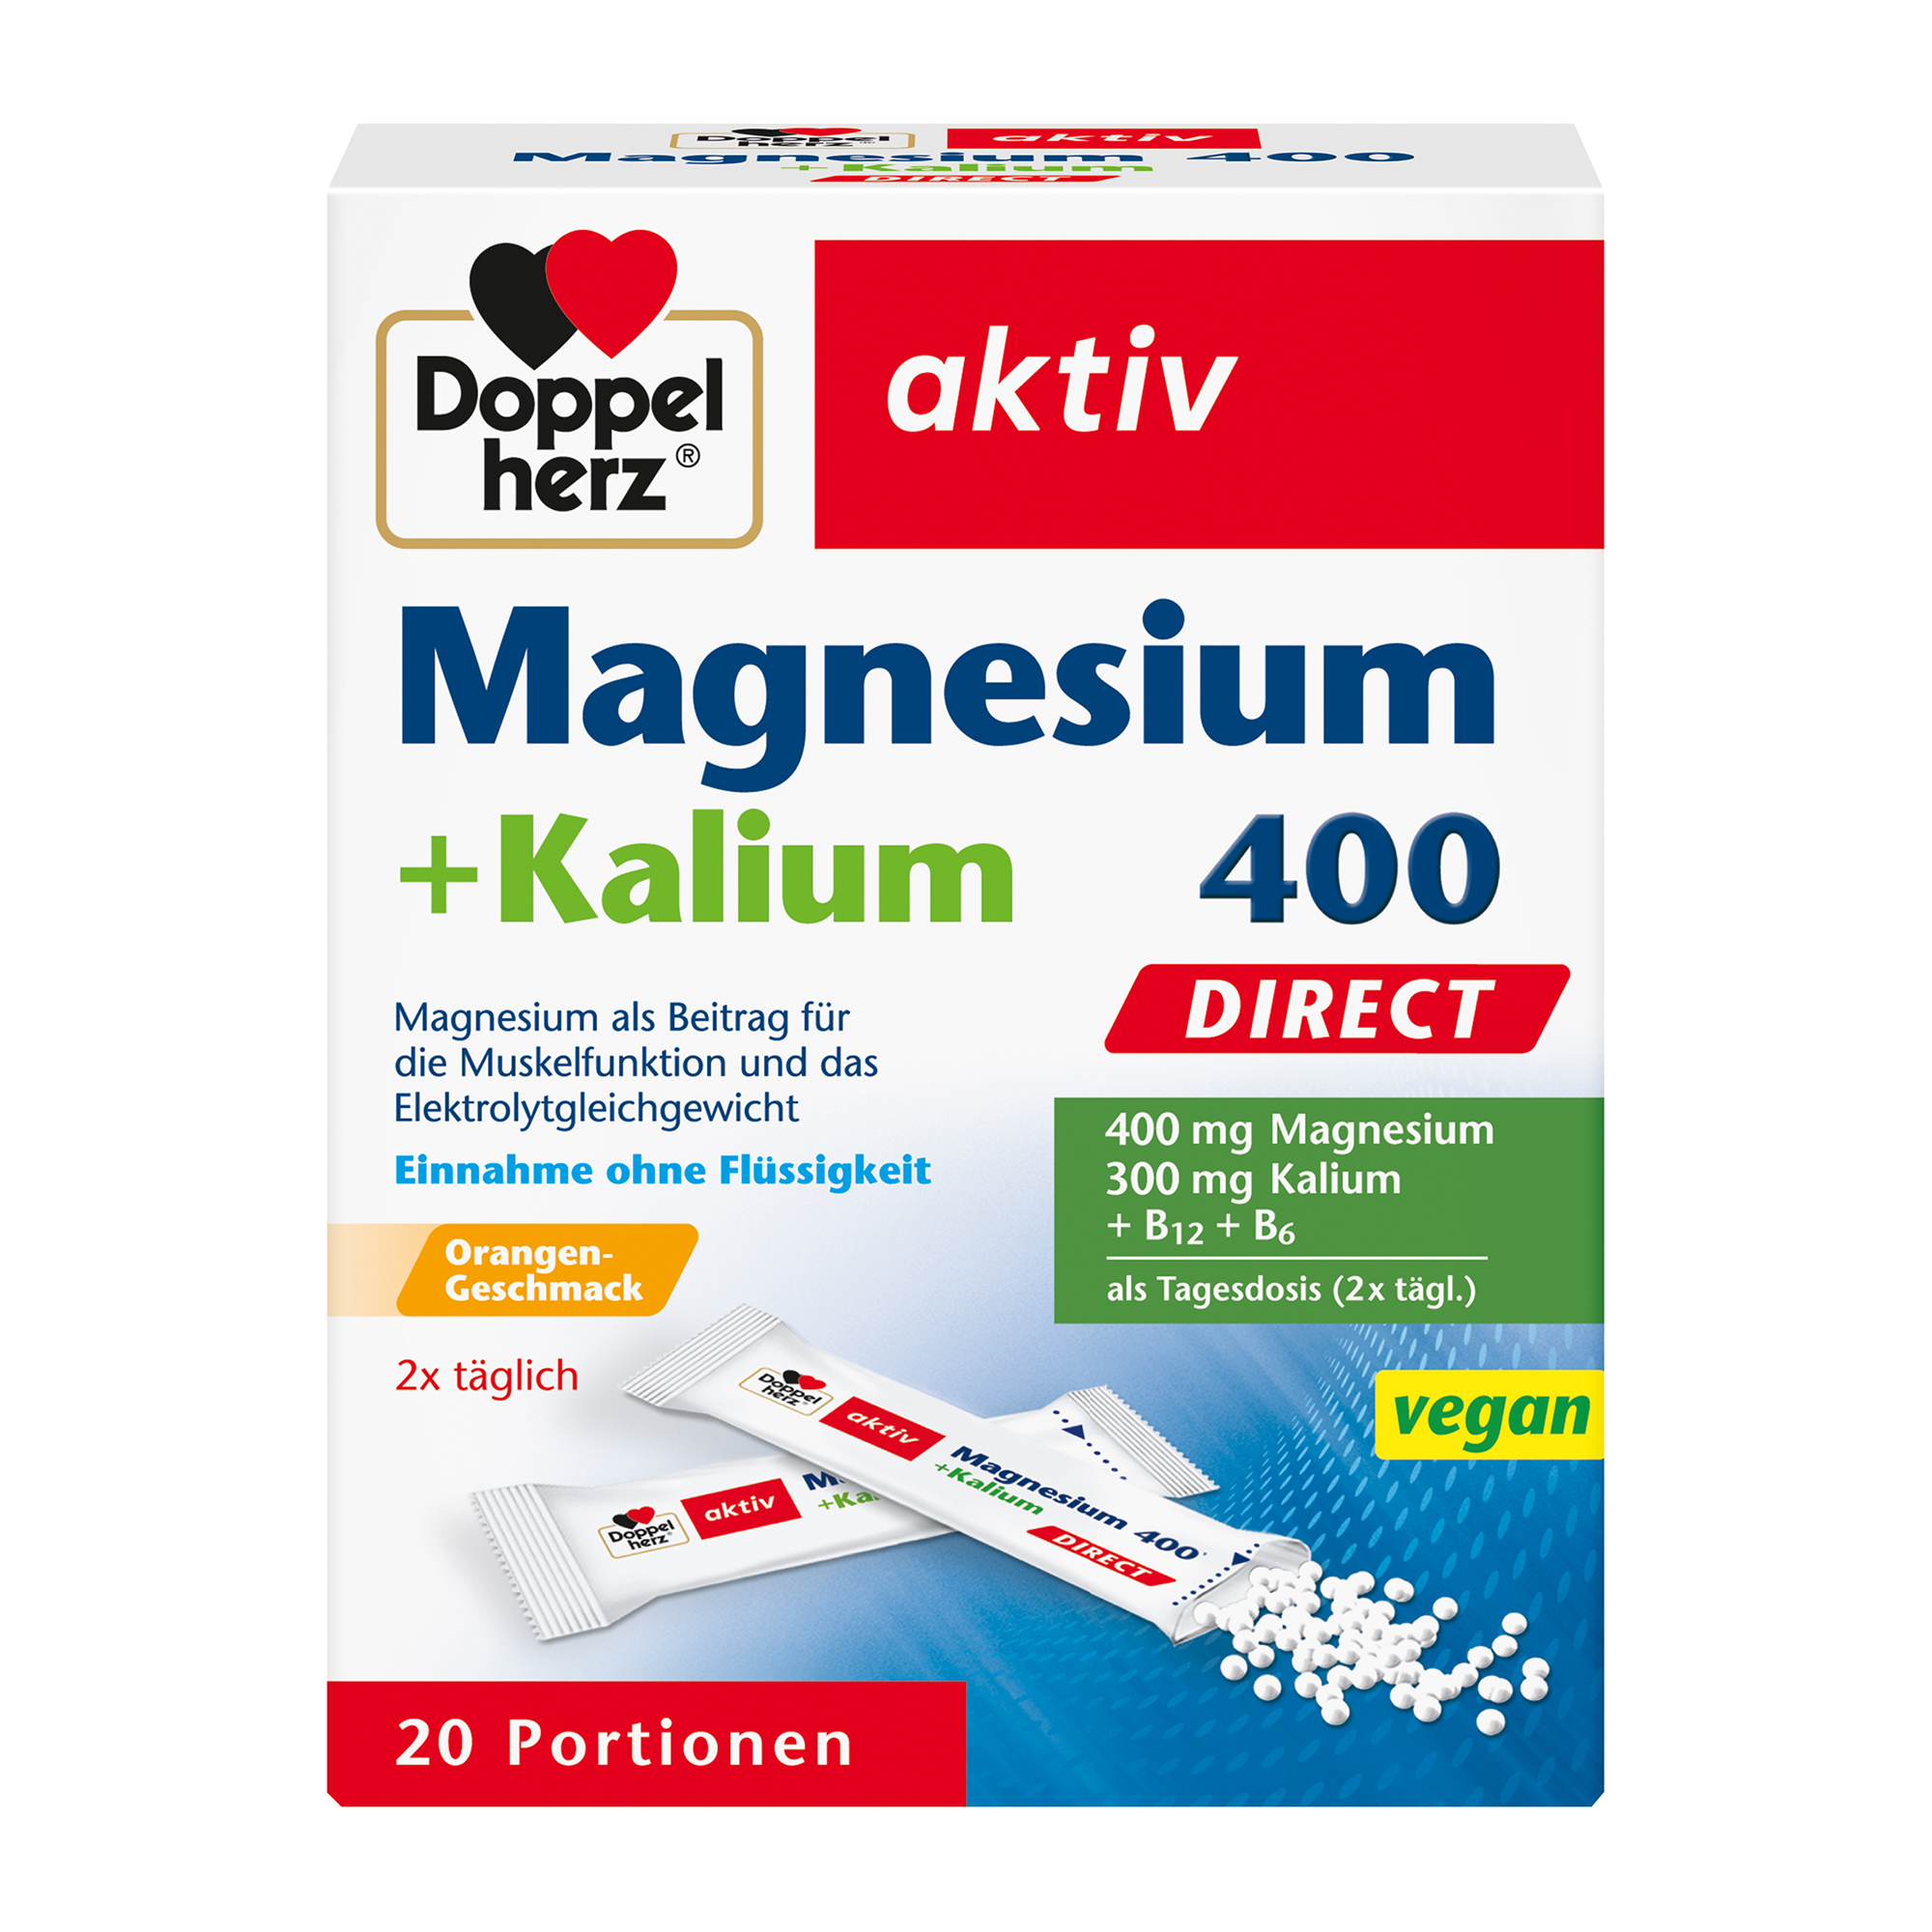 Doppelherz aktiv Magnesium + Kalium, direct, 20 Portionen